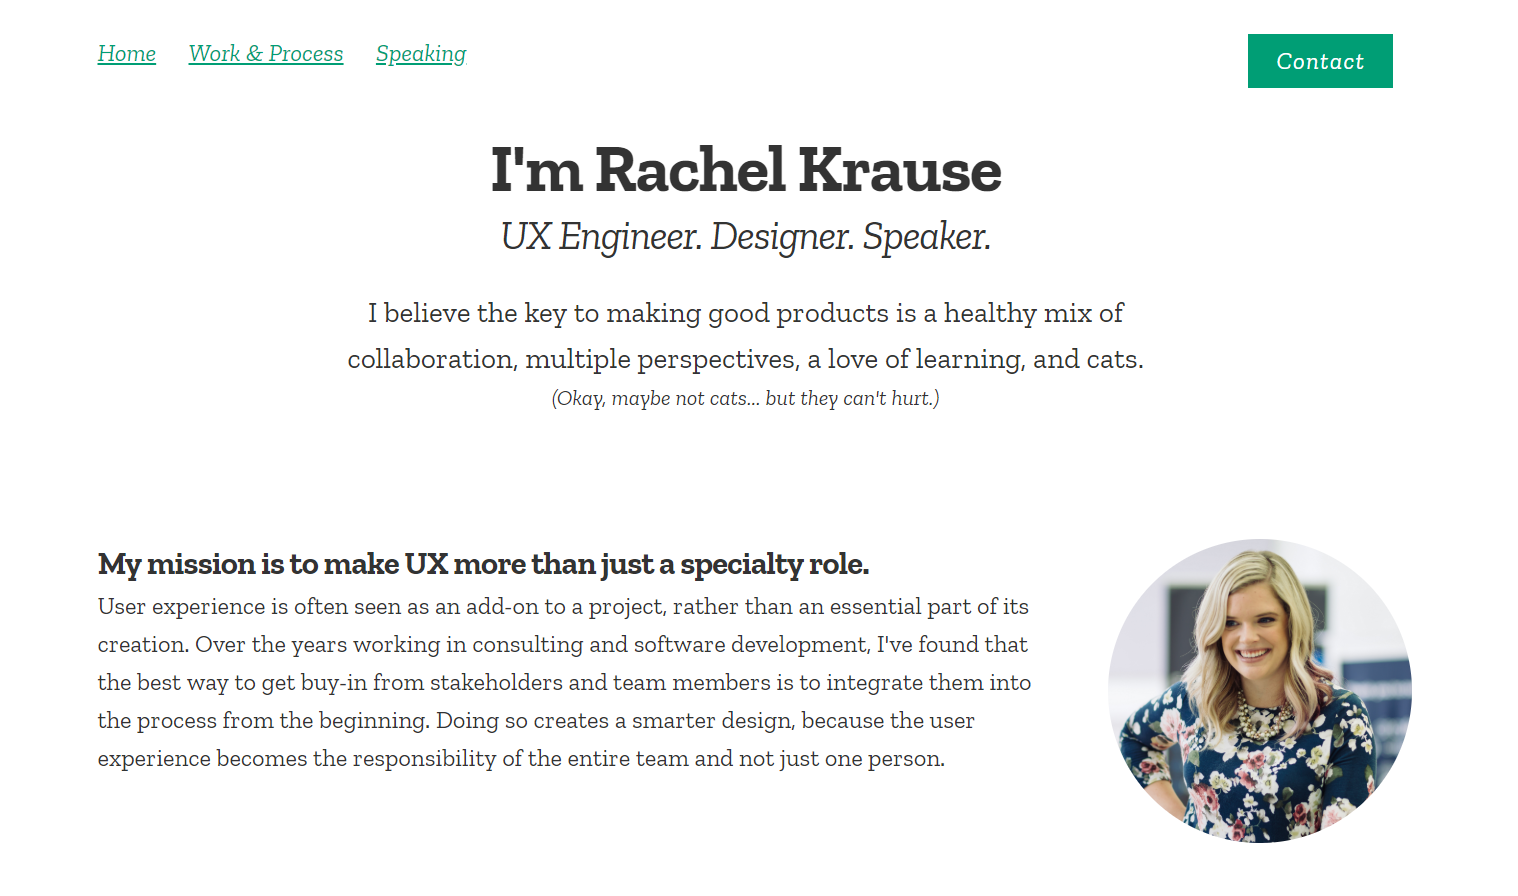 Rachel Krause's UX Engineer portfolio